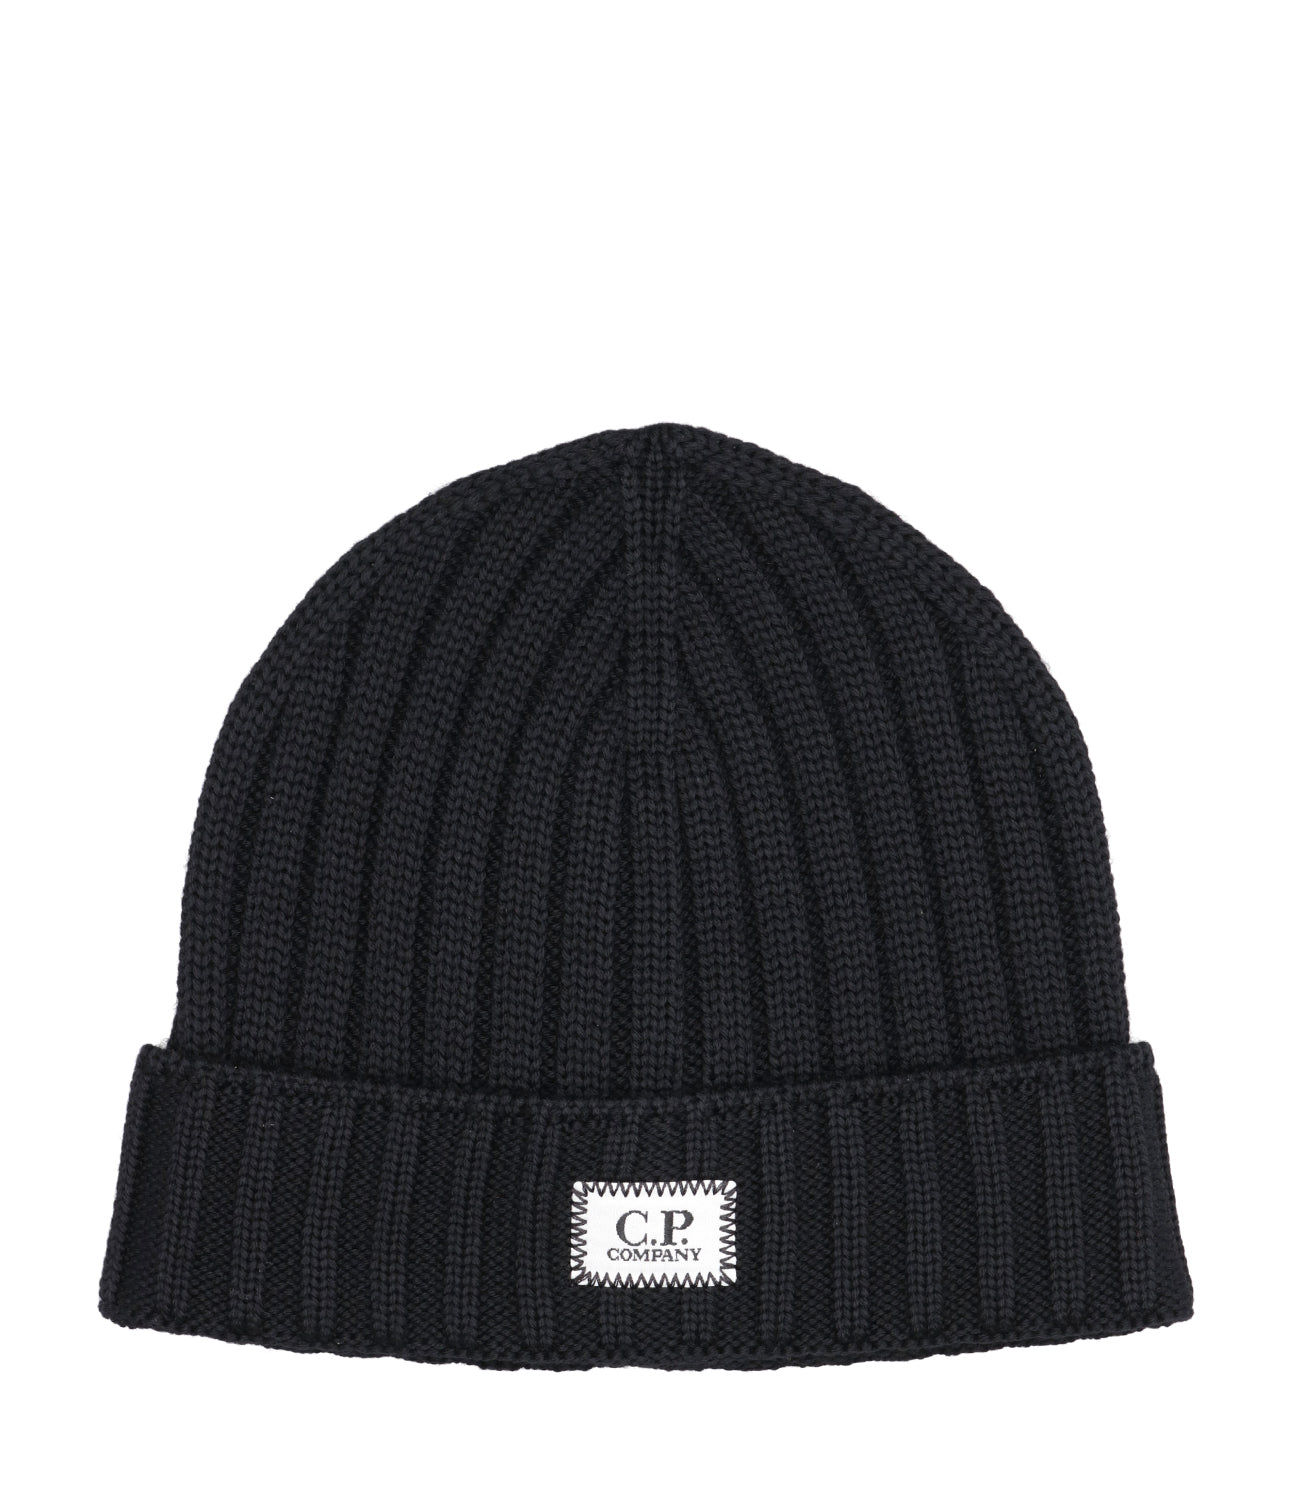 C.P. Company | Black Hat